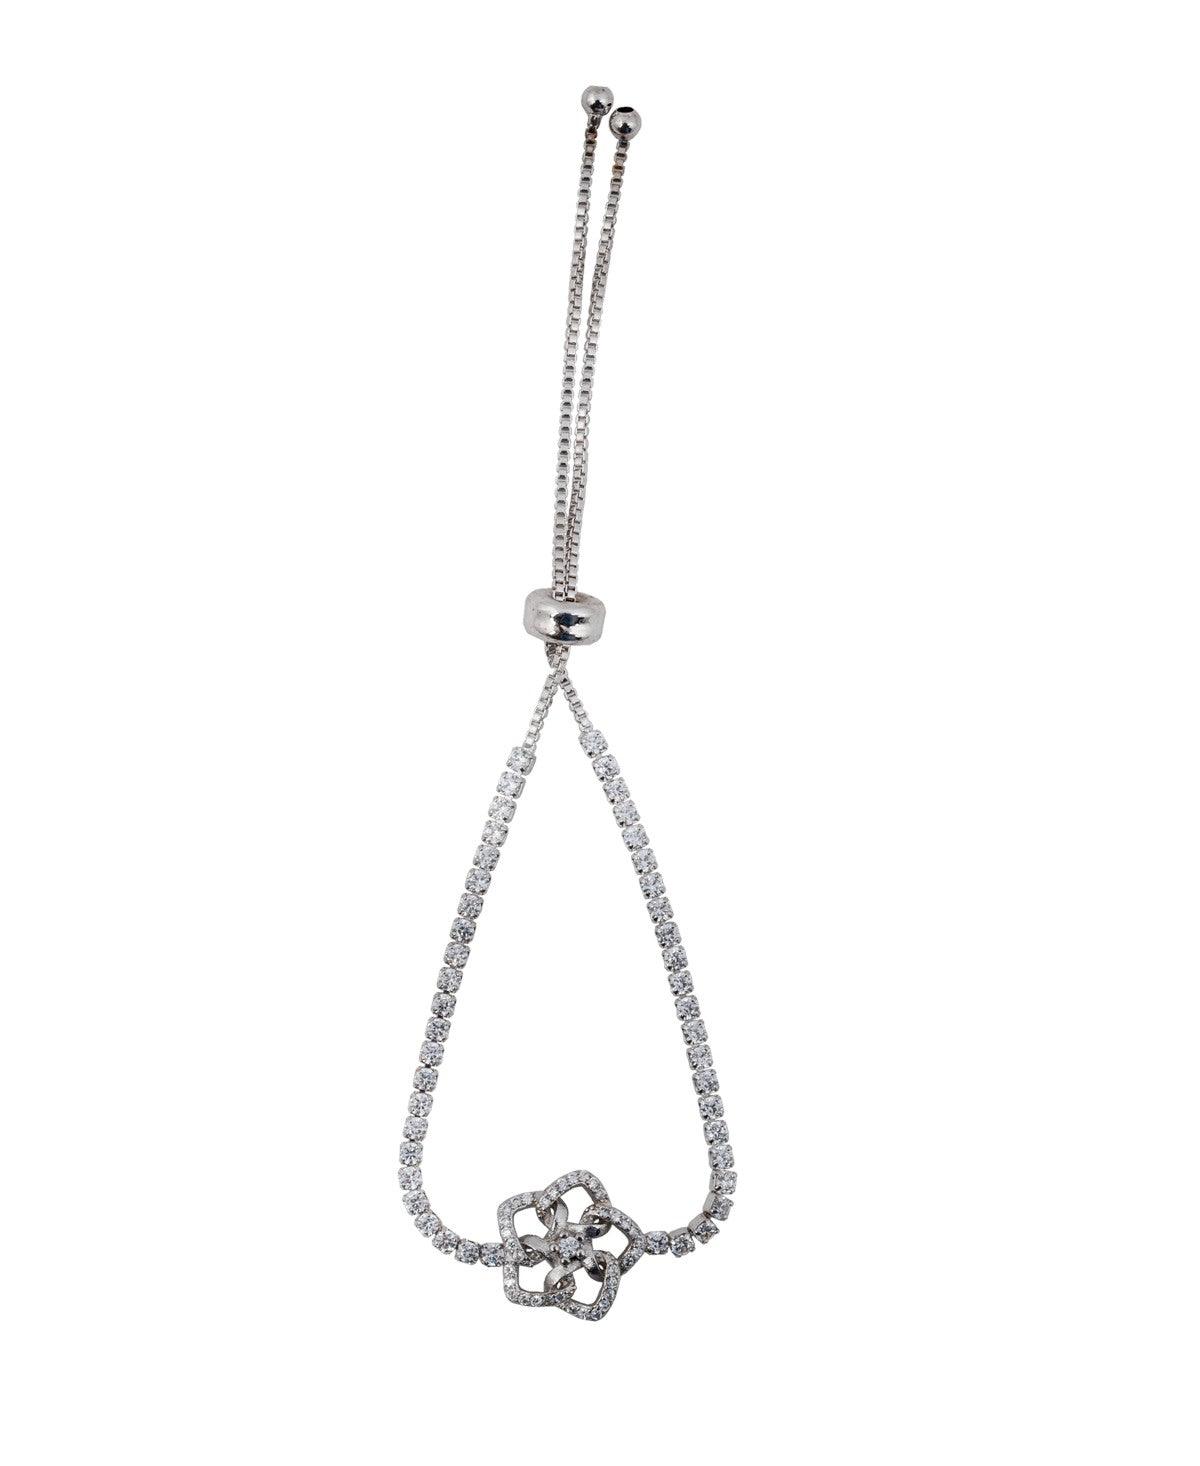 Fashionable Stone Studded Metallic Bracelet - Chandrani Pearls